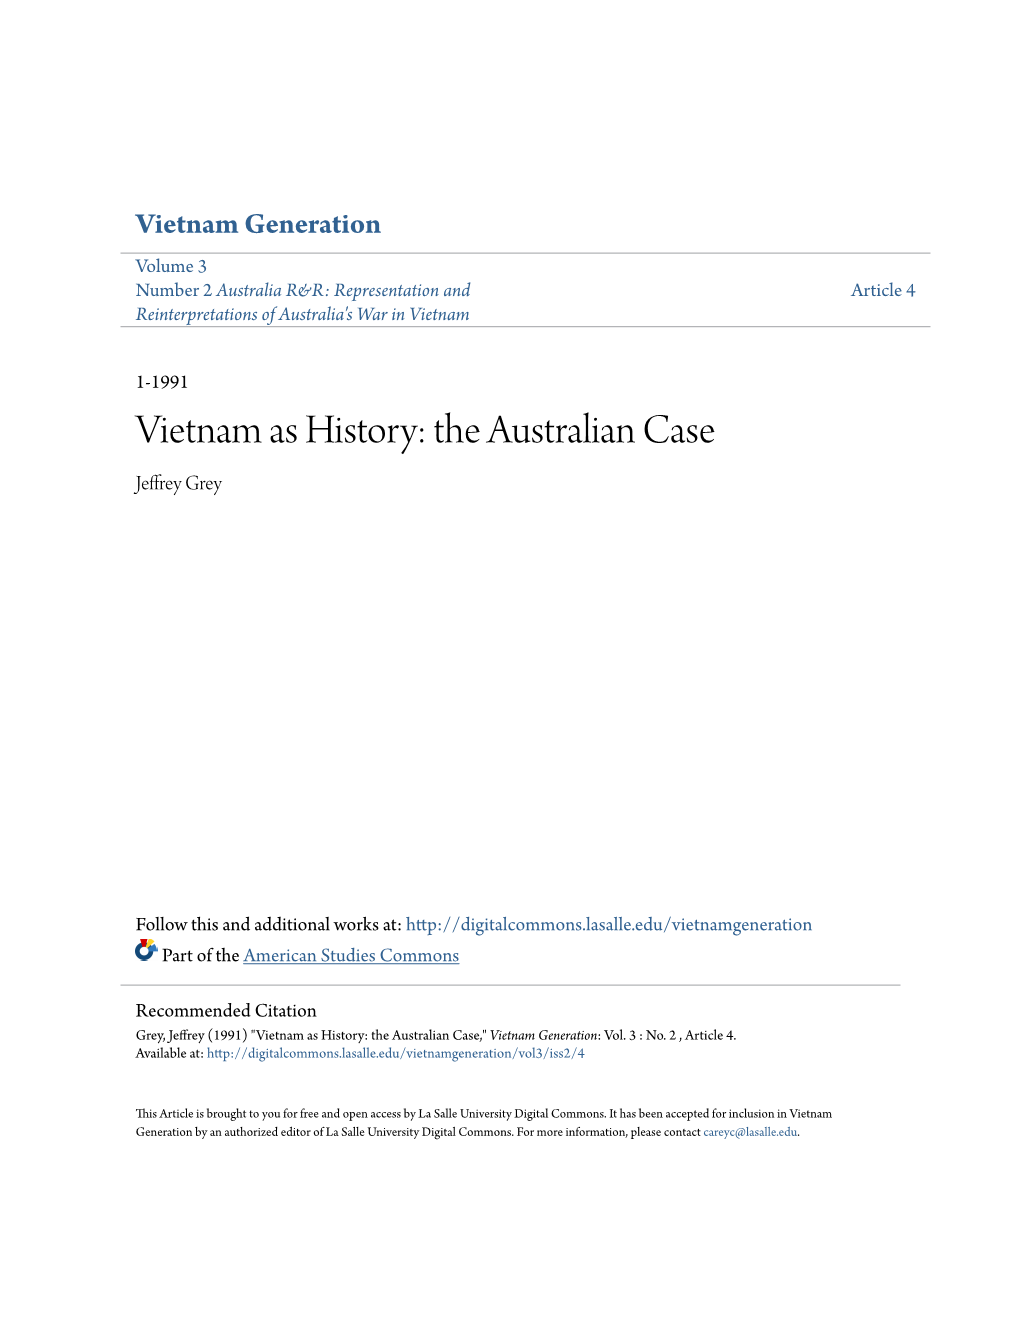 Vietnam As History: the Australian Case Jeffrey Grey